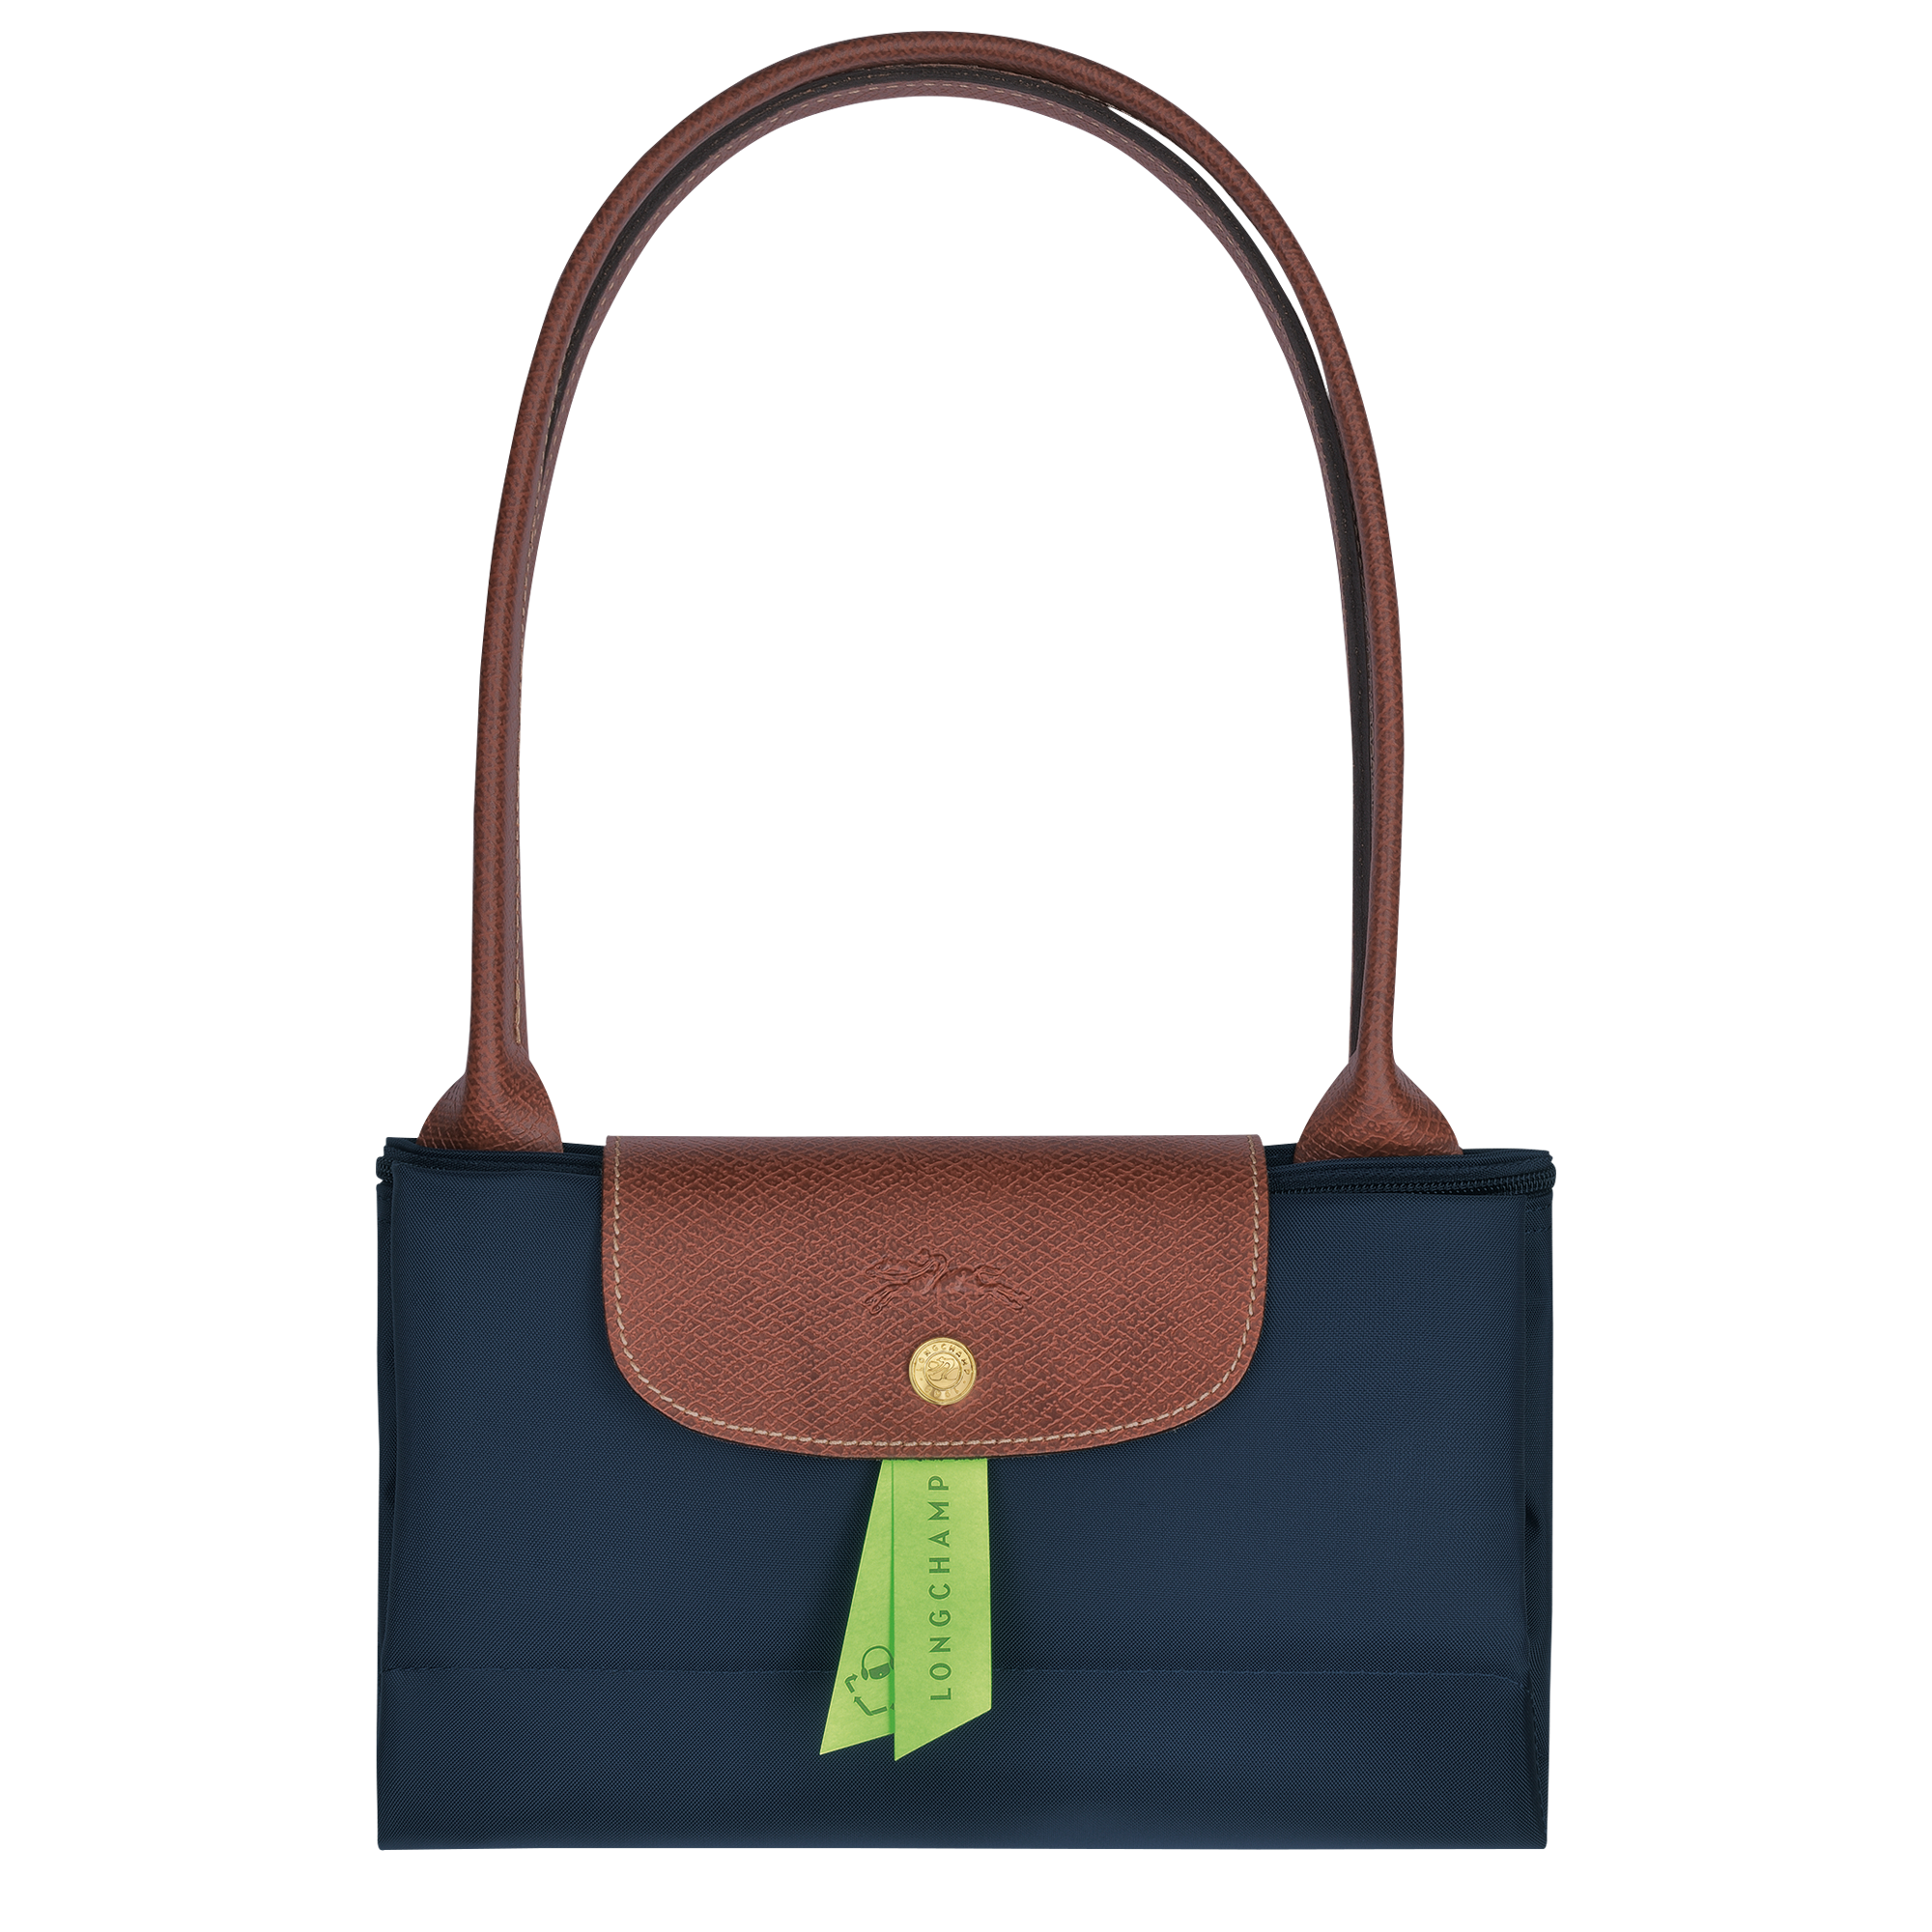 Longchamp Bag Sizes Cm